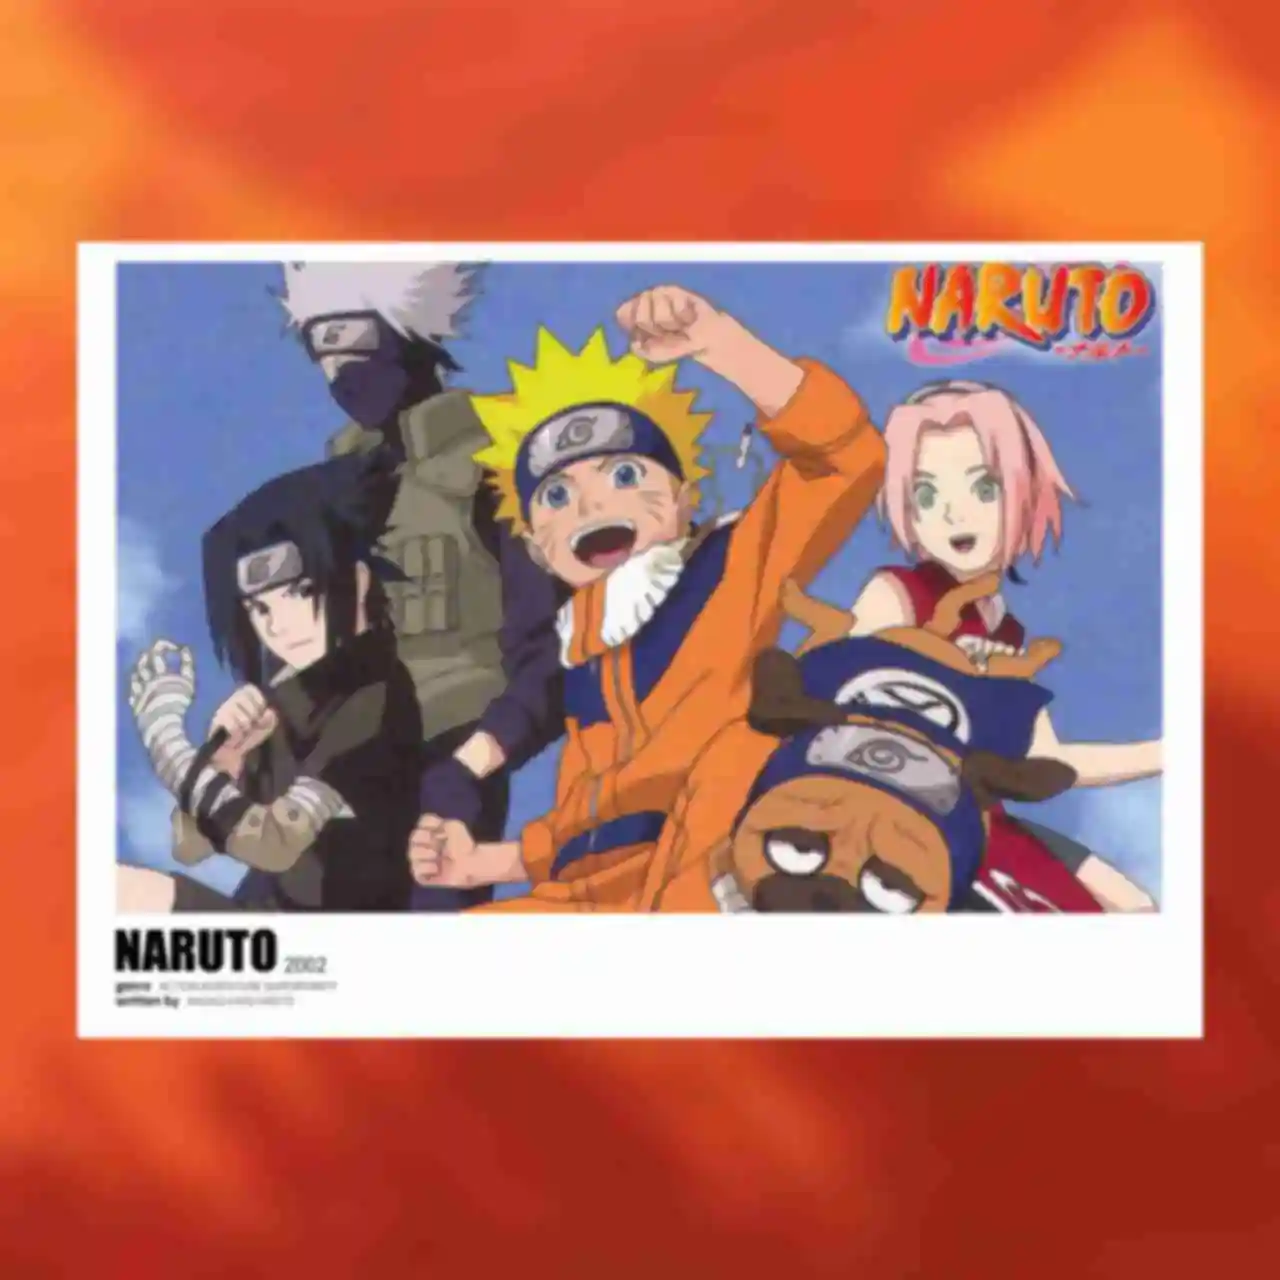 Постер №2 ⦁ Друзья ⦁ Наруто, Саскє, Сакура, Какаши ⦁ Плакат Команда 7 ⦁ Сувениры Наруто ⦁ Подарки в стиле аниме Naruto. Фото №85